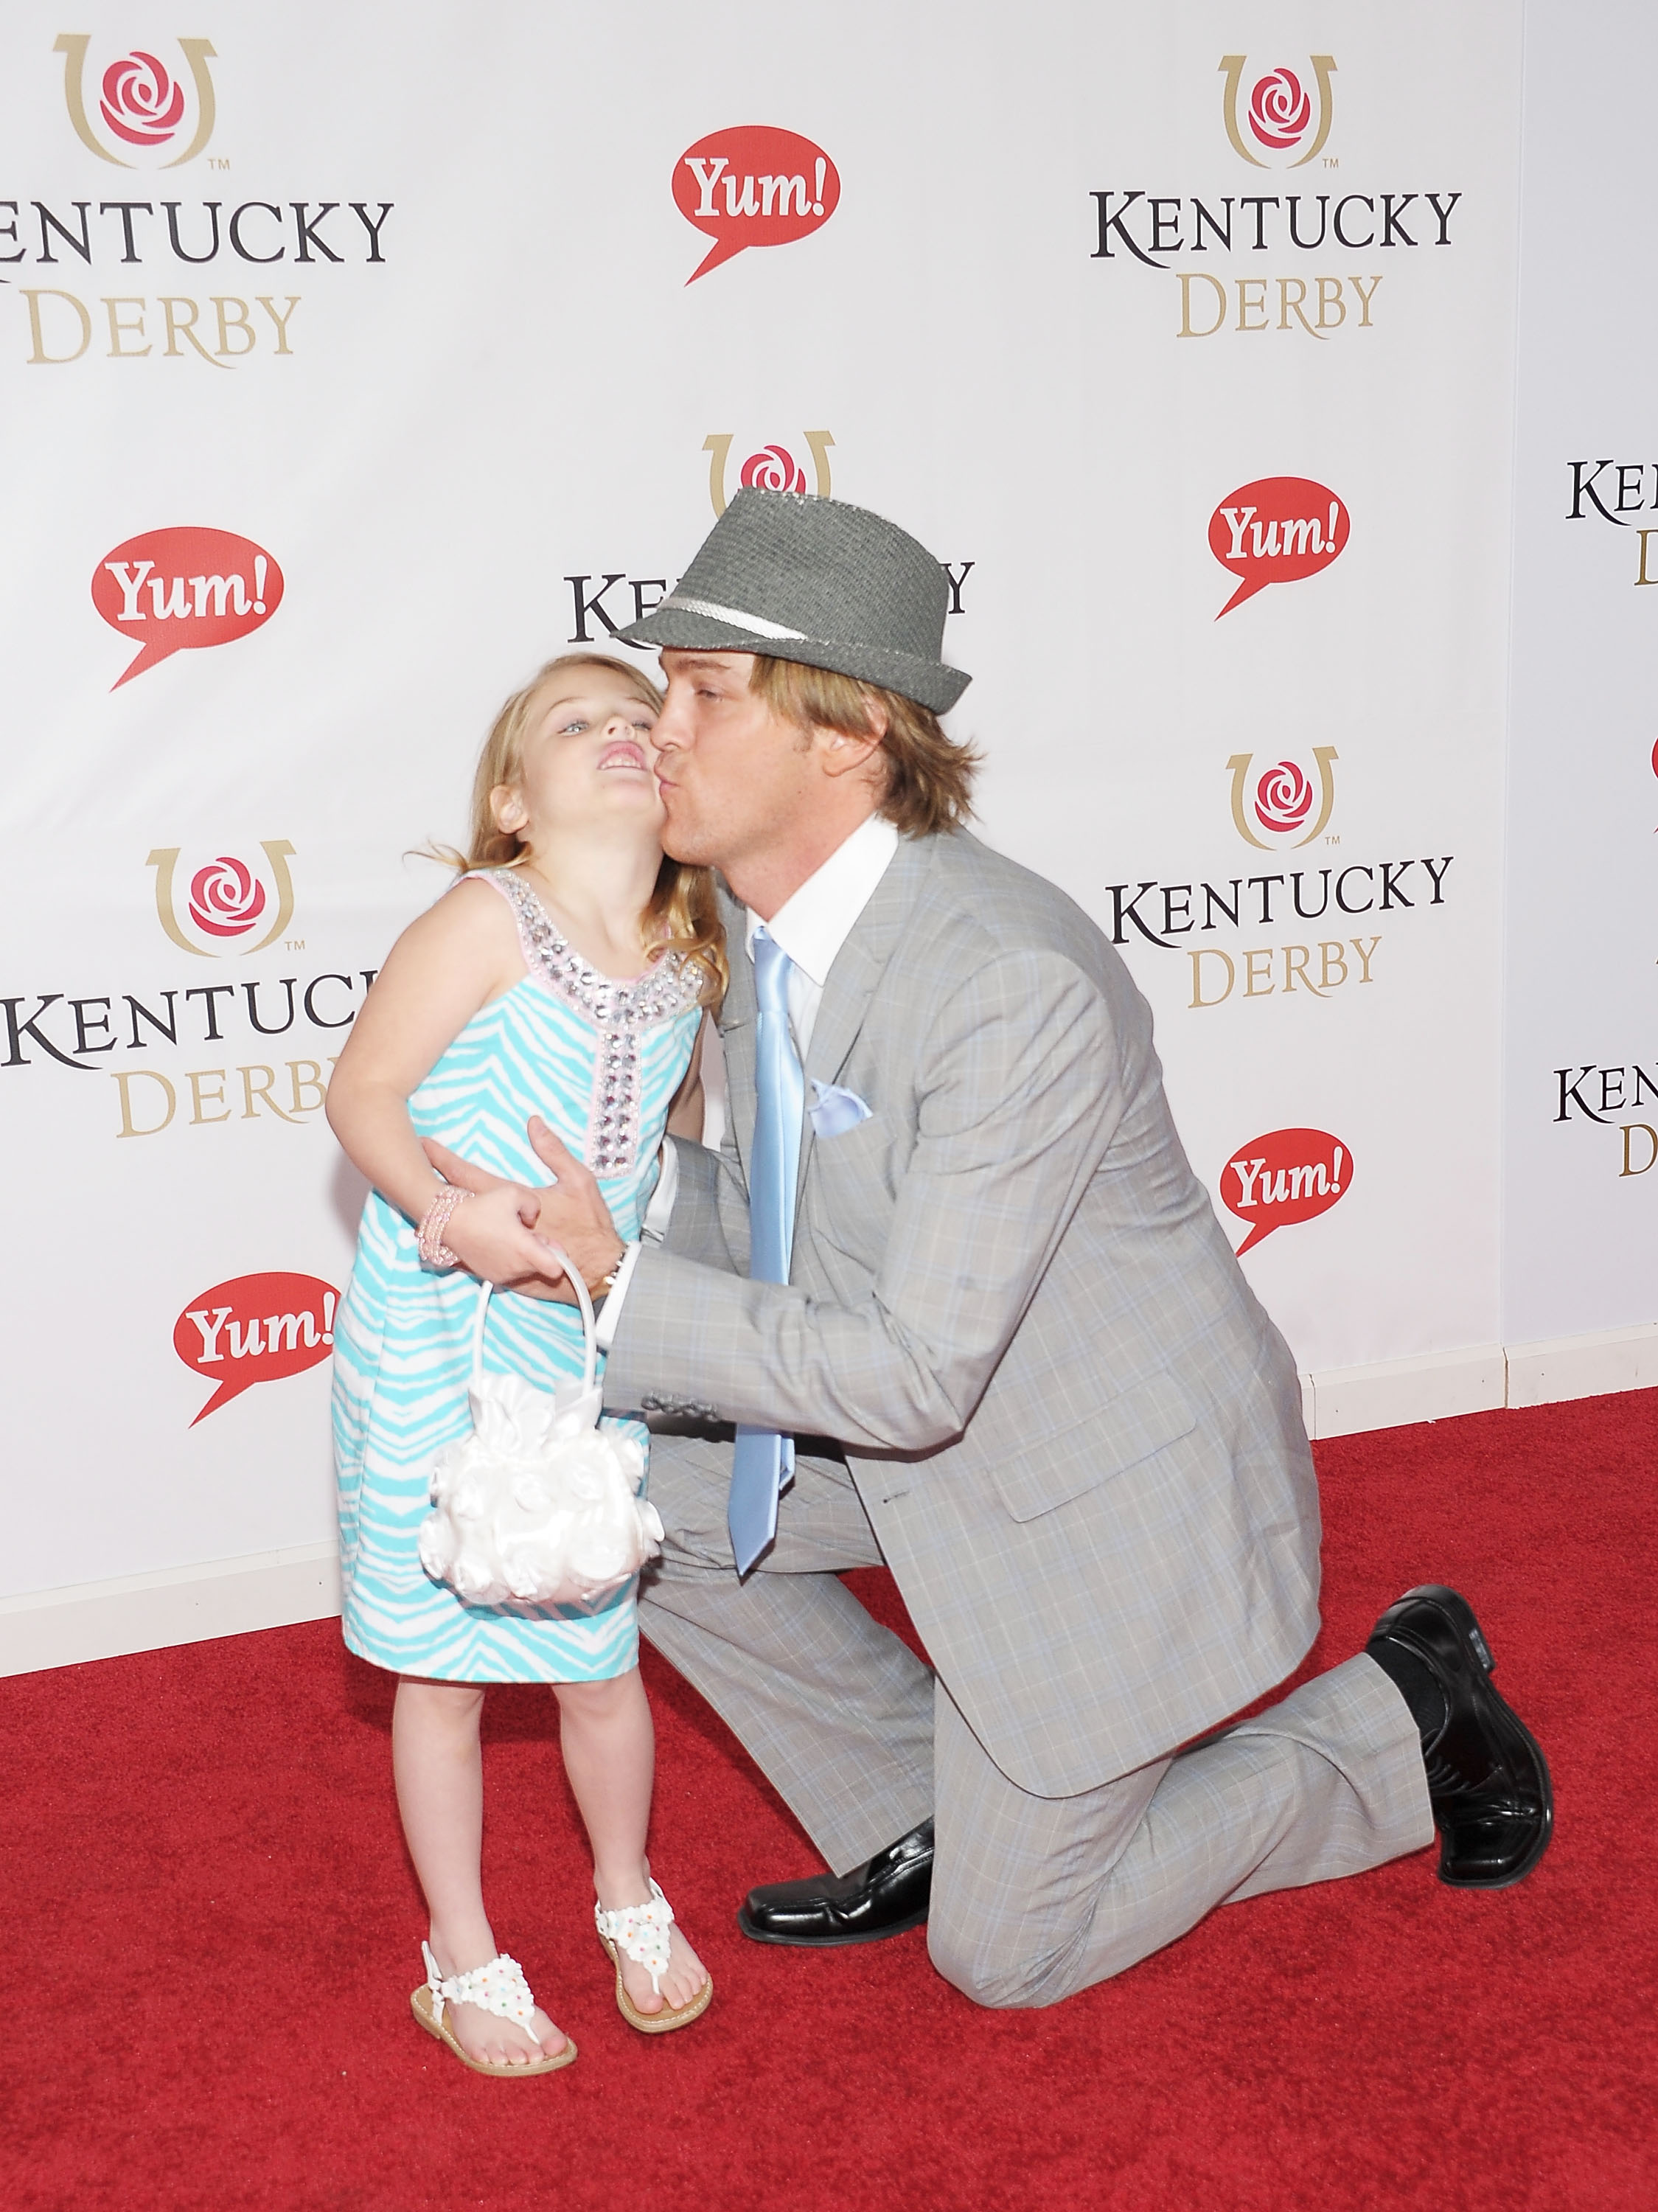 Fotograf Larry Birkhead und Tochter Dannielynn Birkhead besuchen das 137. Kentucky Derby in Churchill Downs am 7. Mai 2011 in Louisville, Kentucky | Quelle: Getty Images